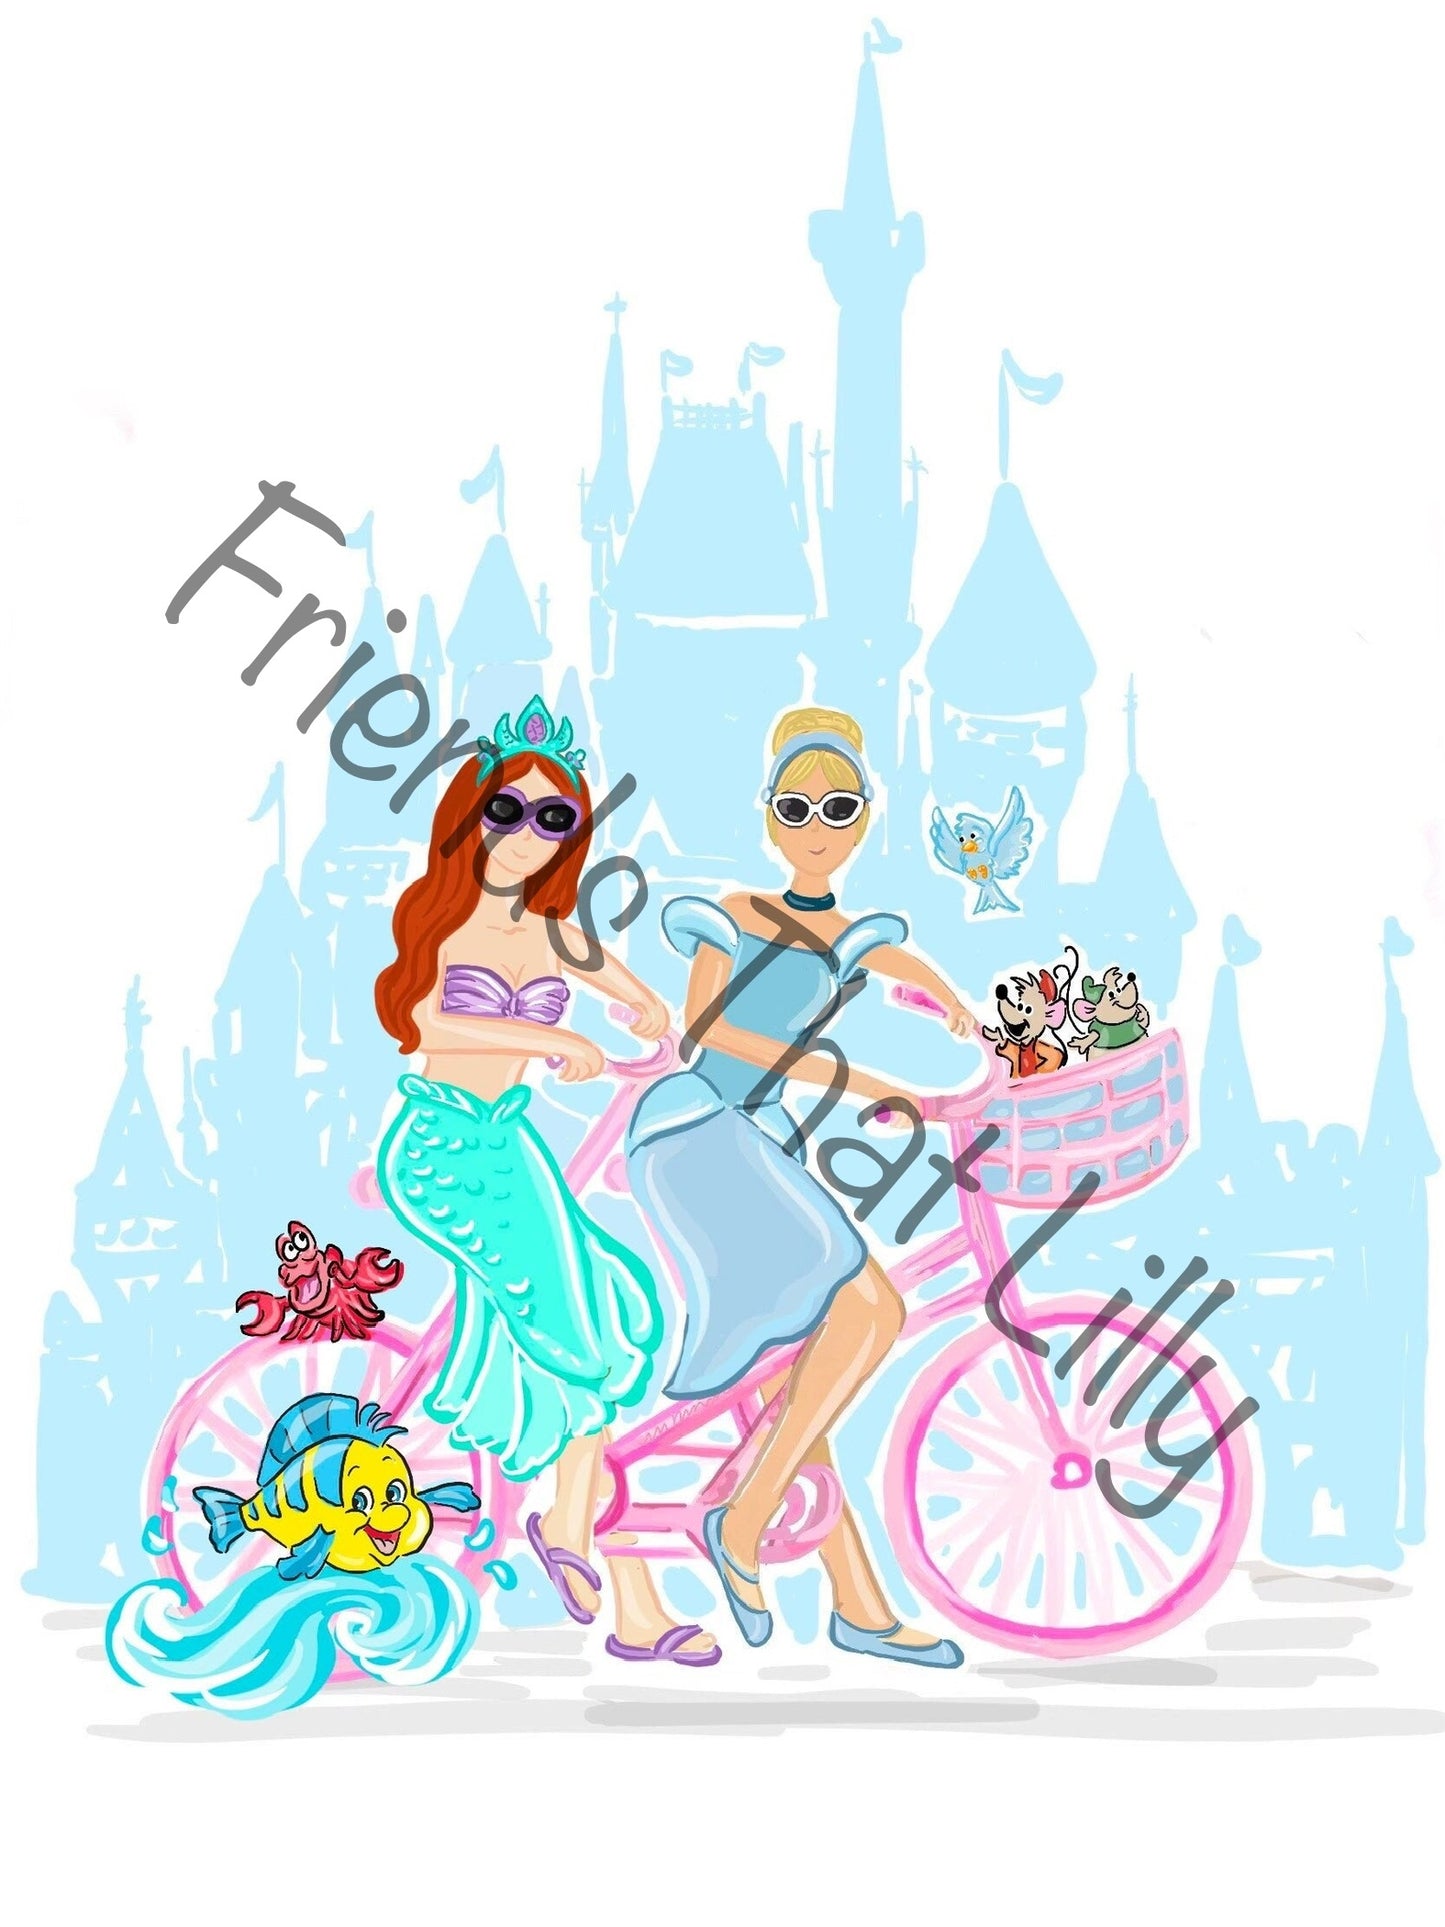 SALE! Kids FTL Mermaid and Blue Princess Illustration Shirts